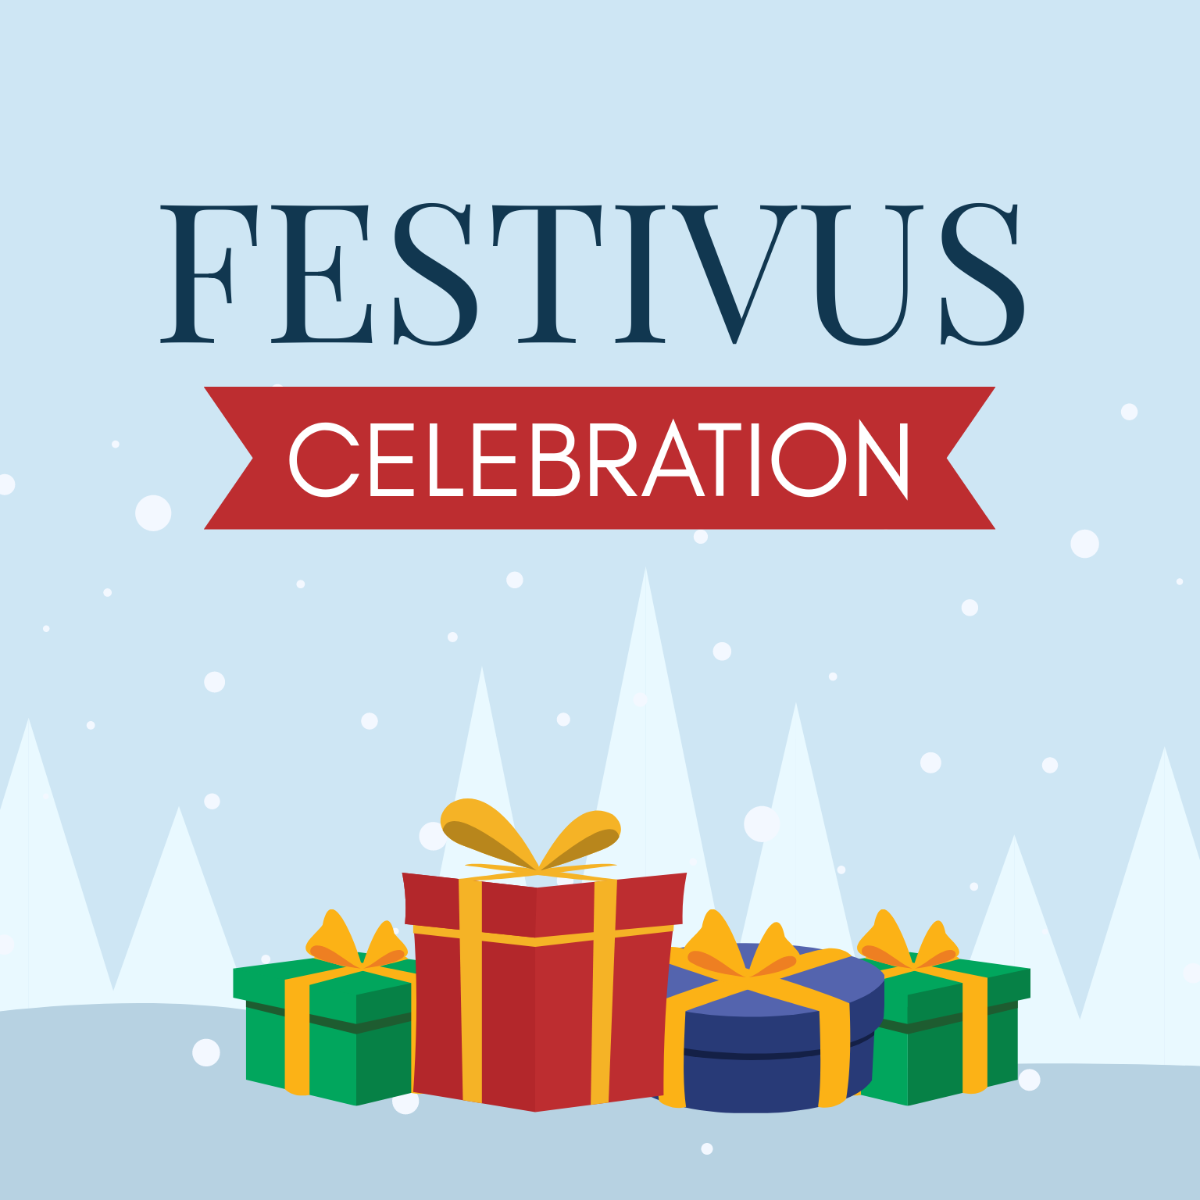 Free Festivus Celebration Vector Template